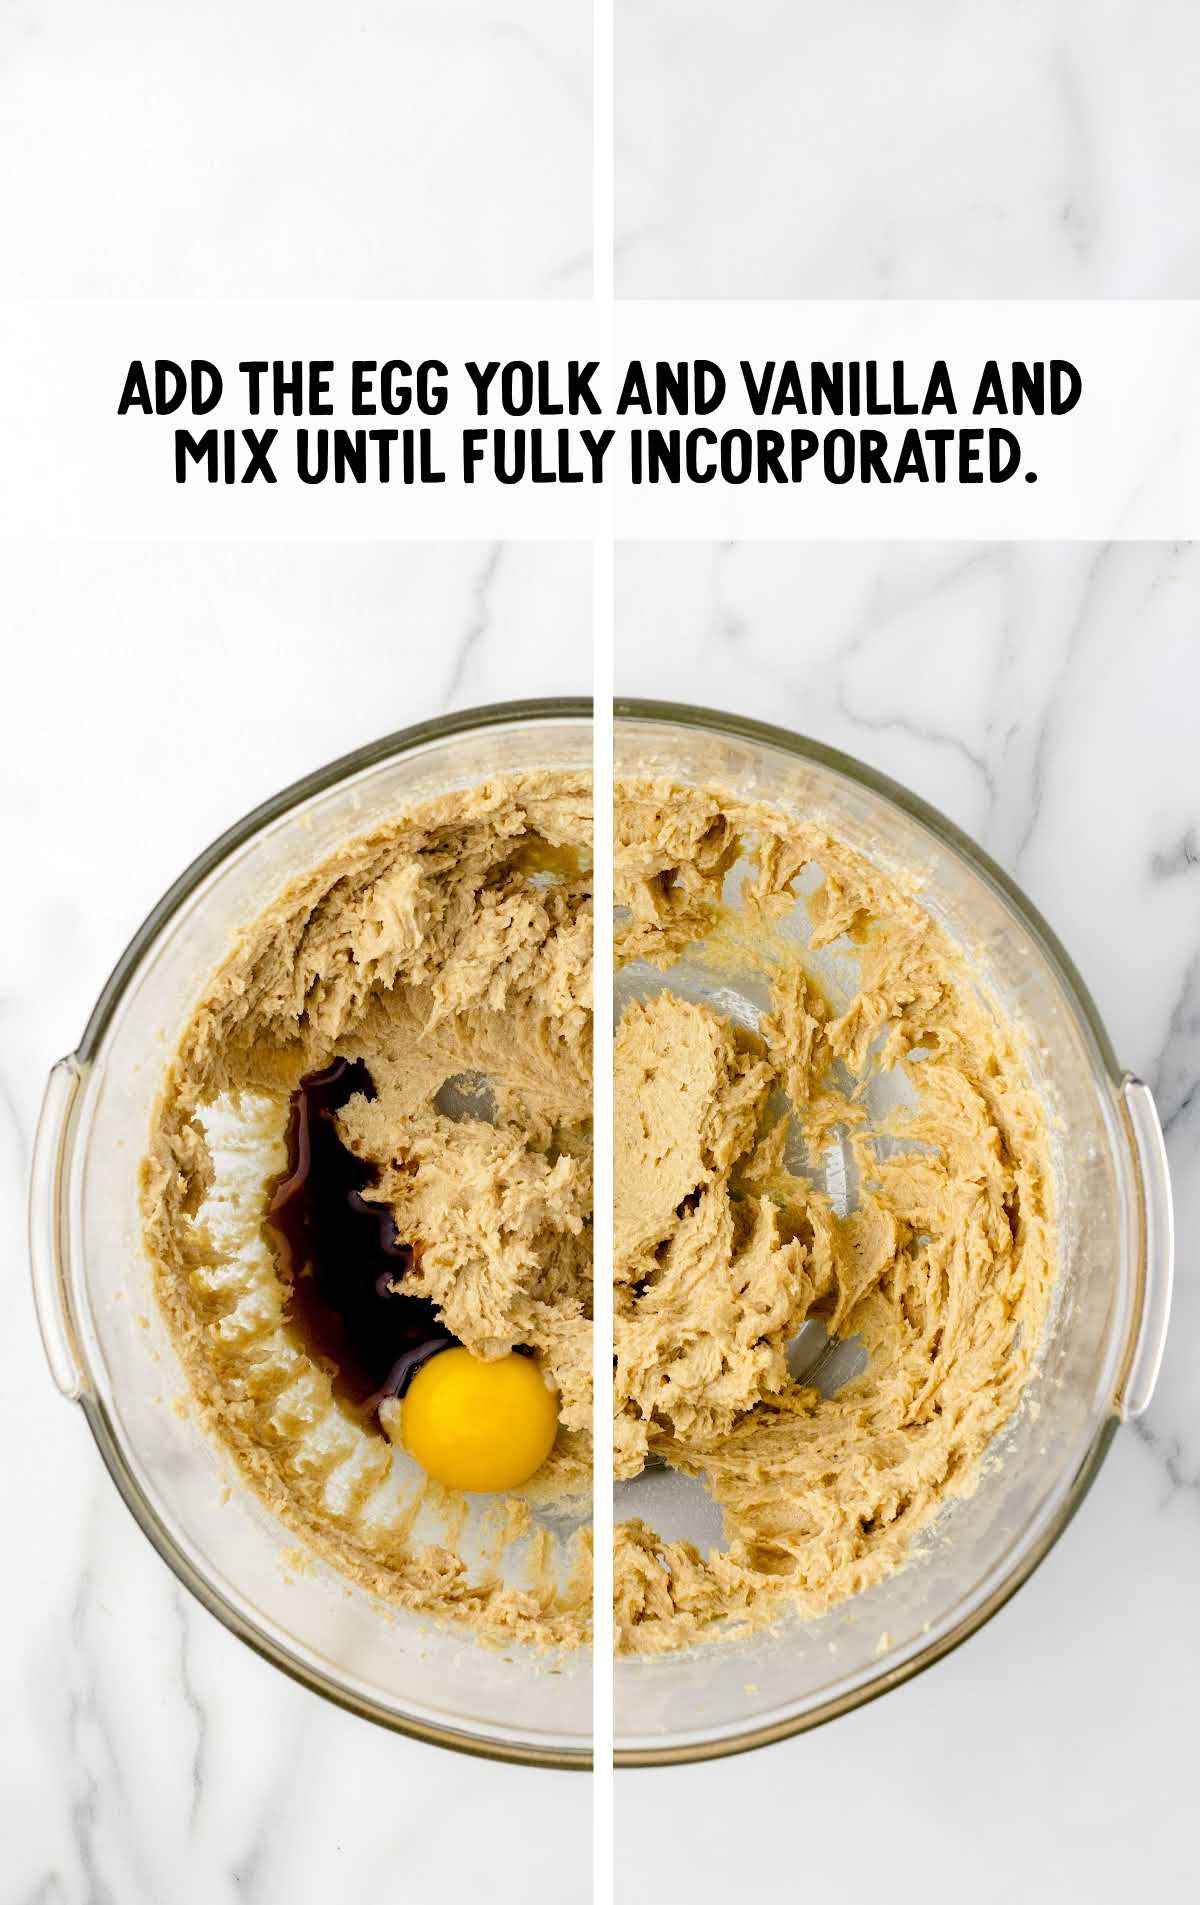 egg yolk and vanilla added together